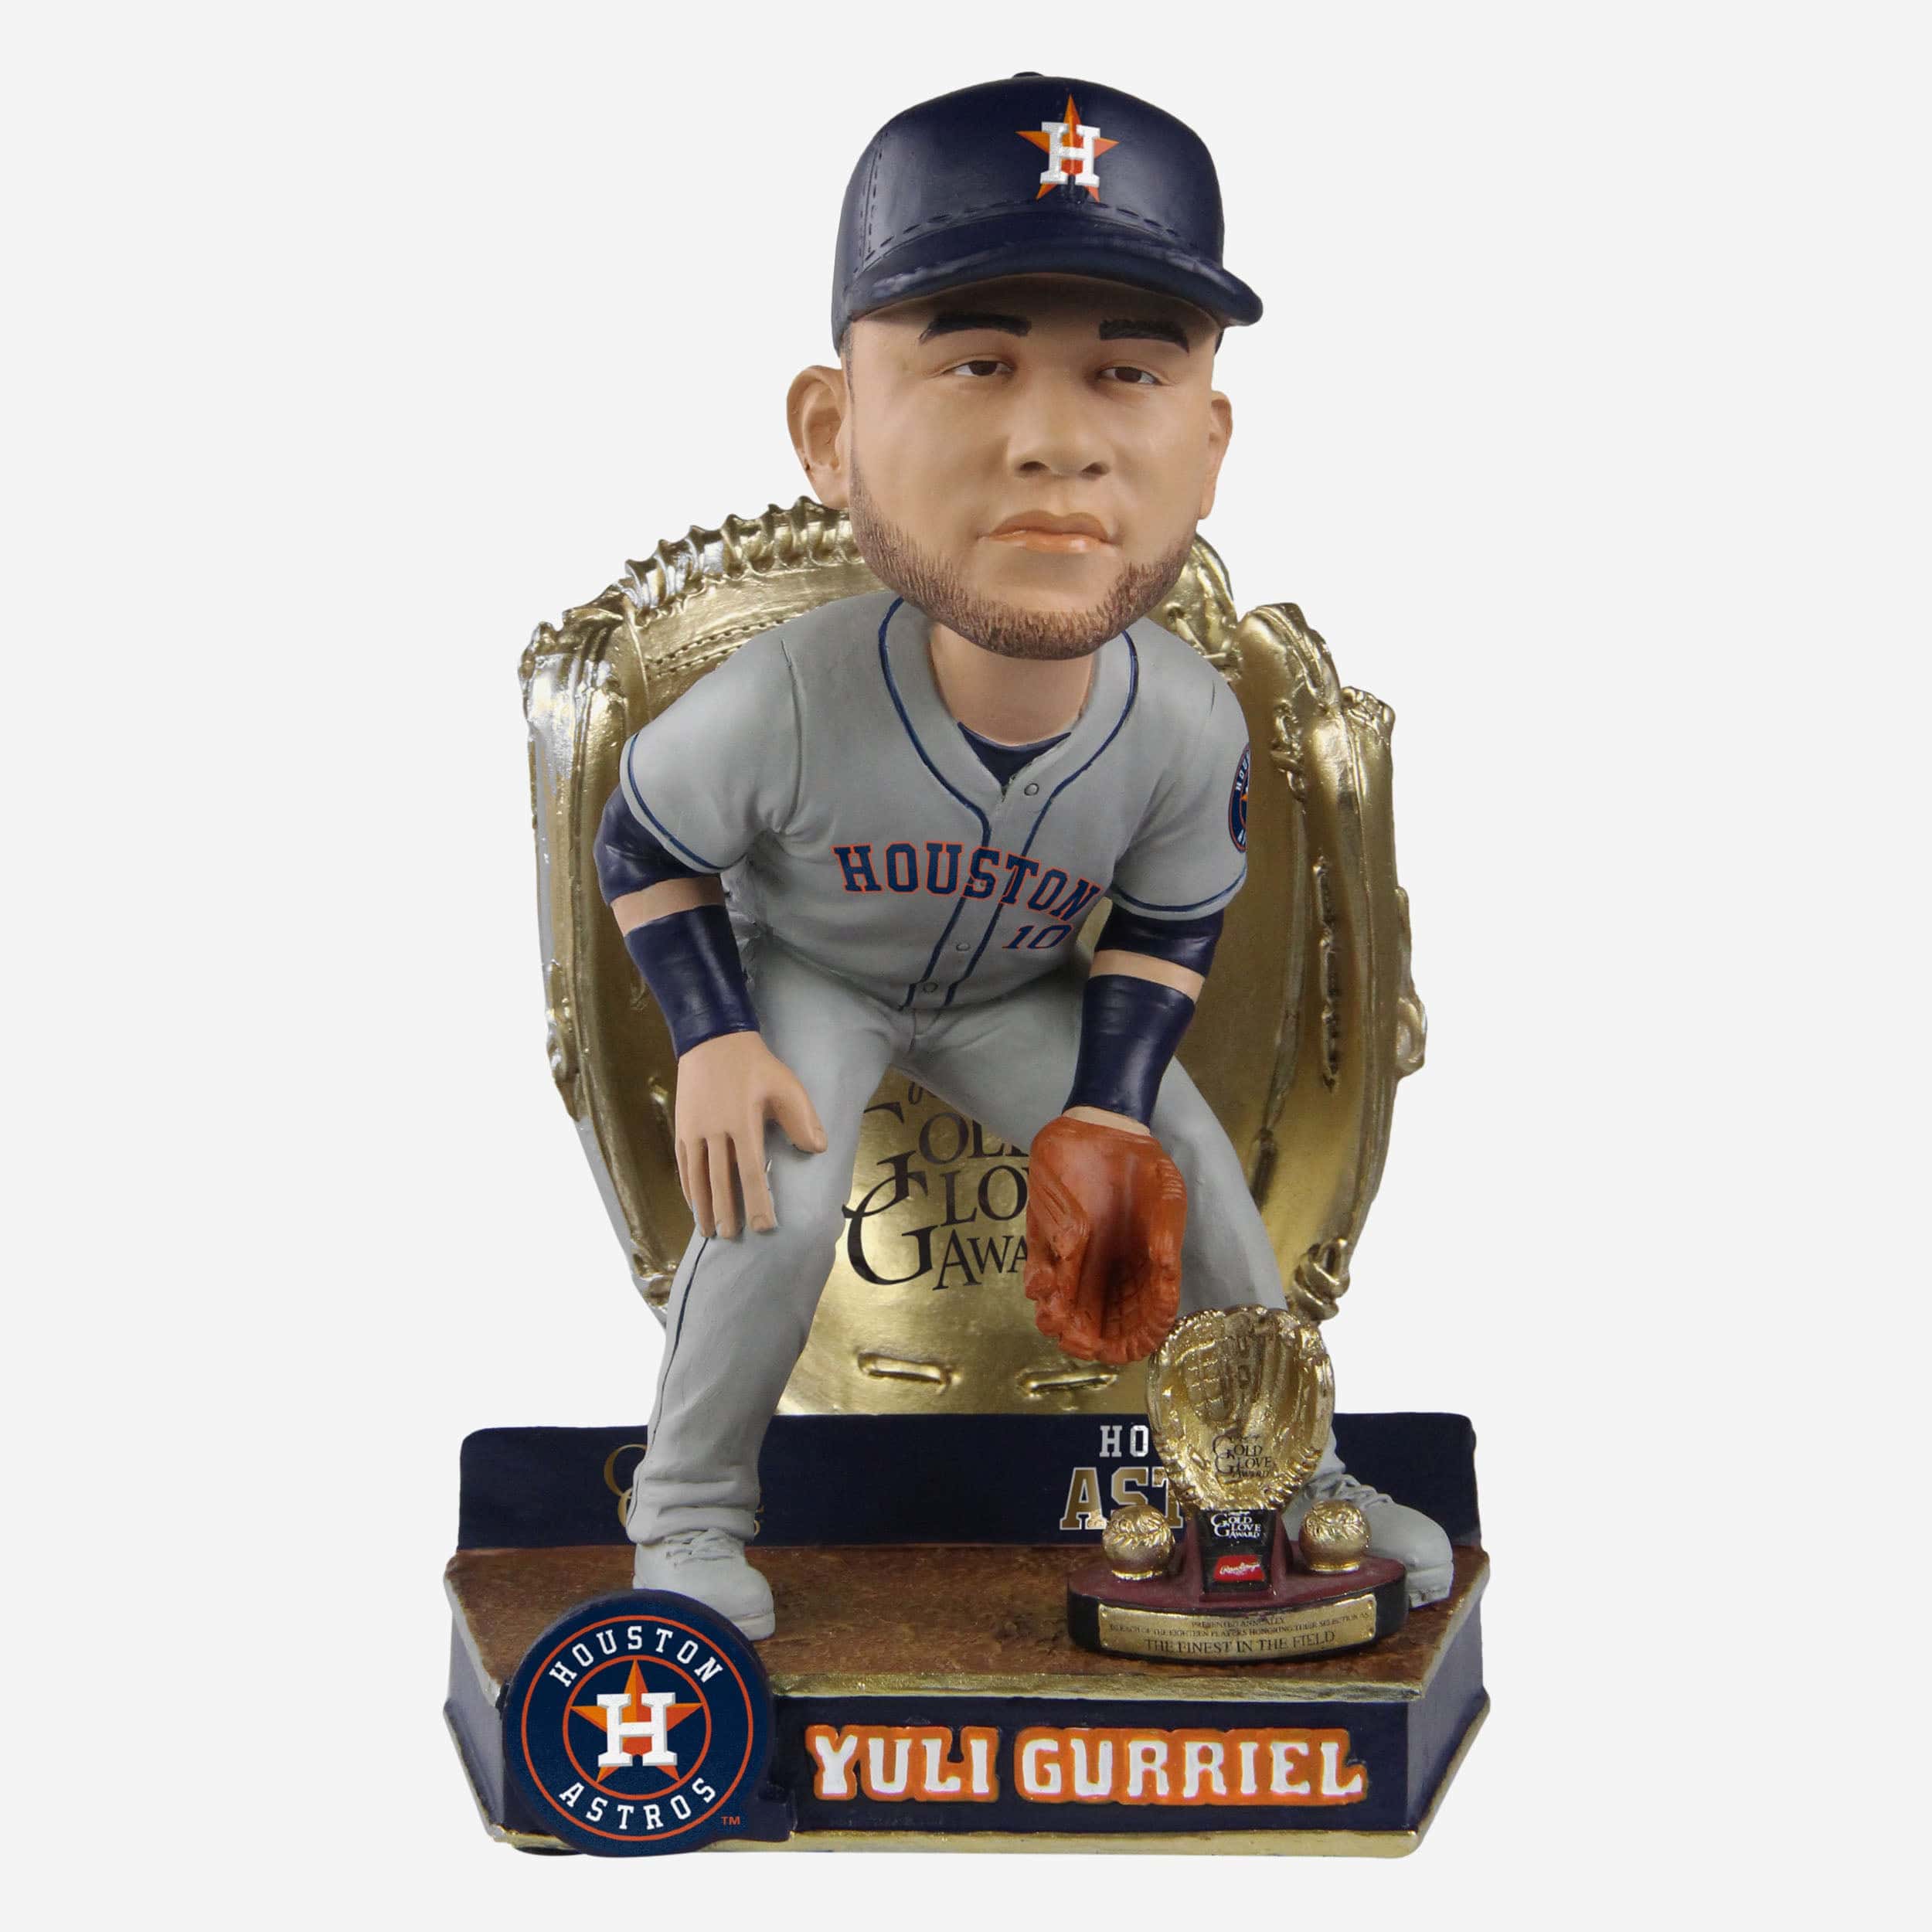 October 3, 2021 Houston Astros - Yuli Gurriel Hair Bobblehead